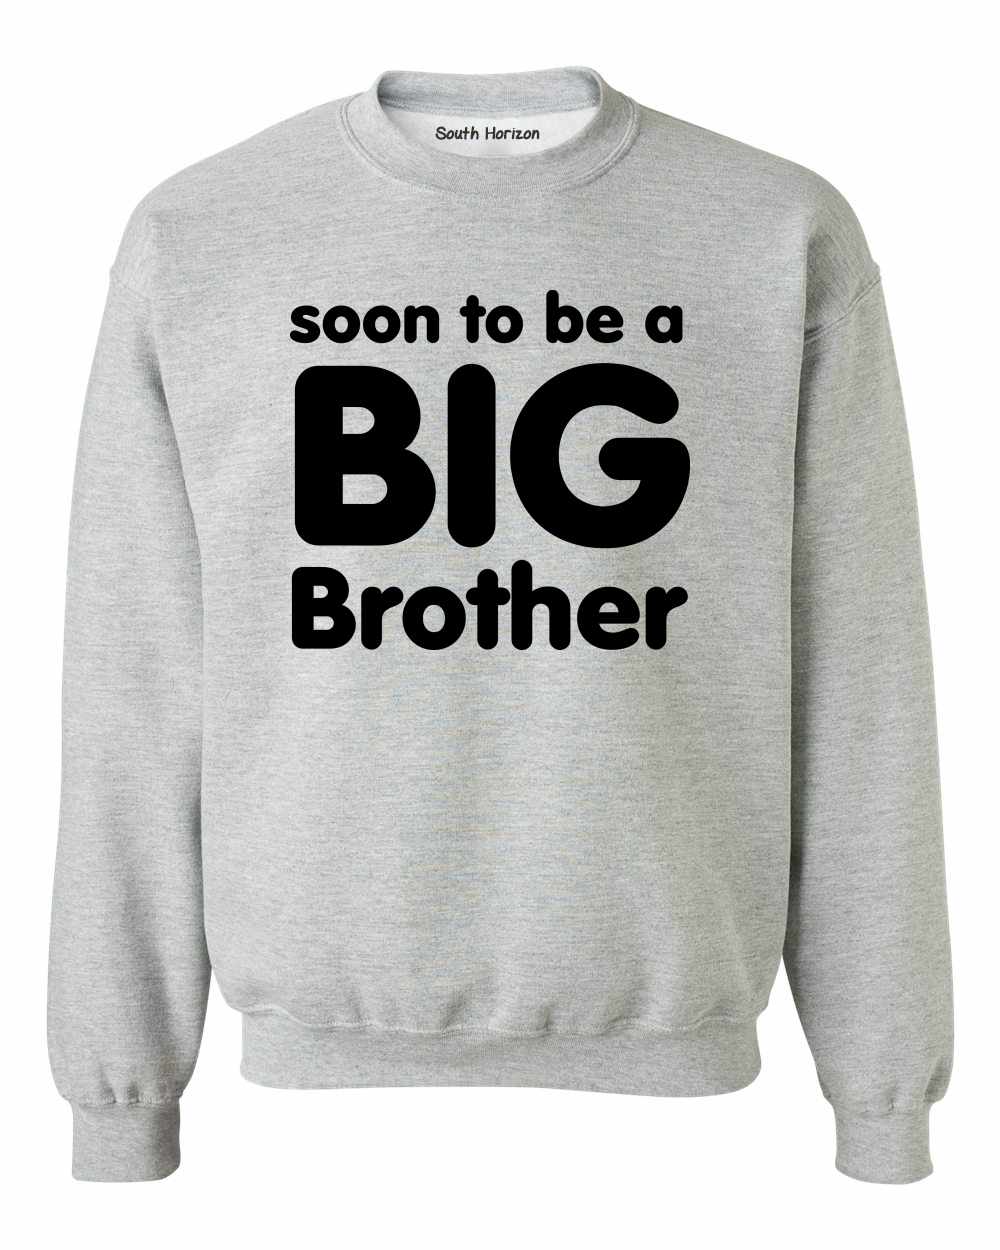 Soon to be a BIG BROTHER on SweatShirt